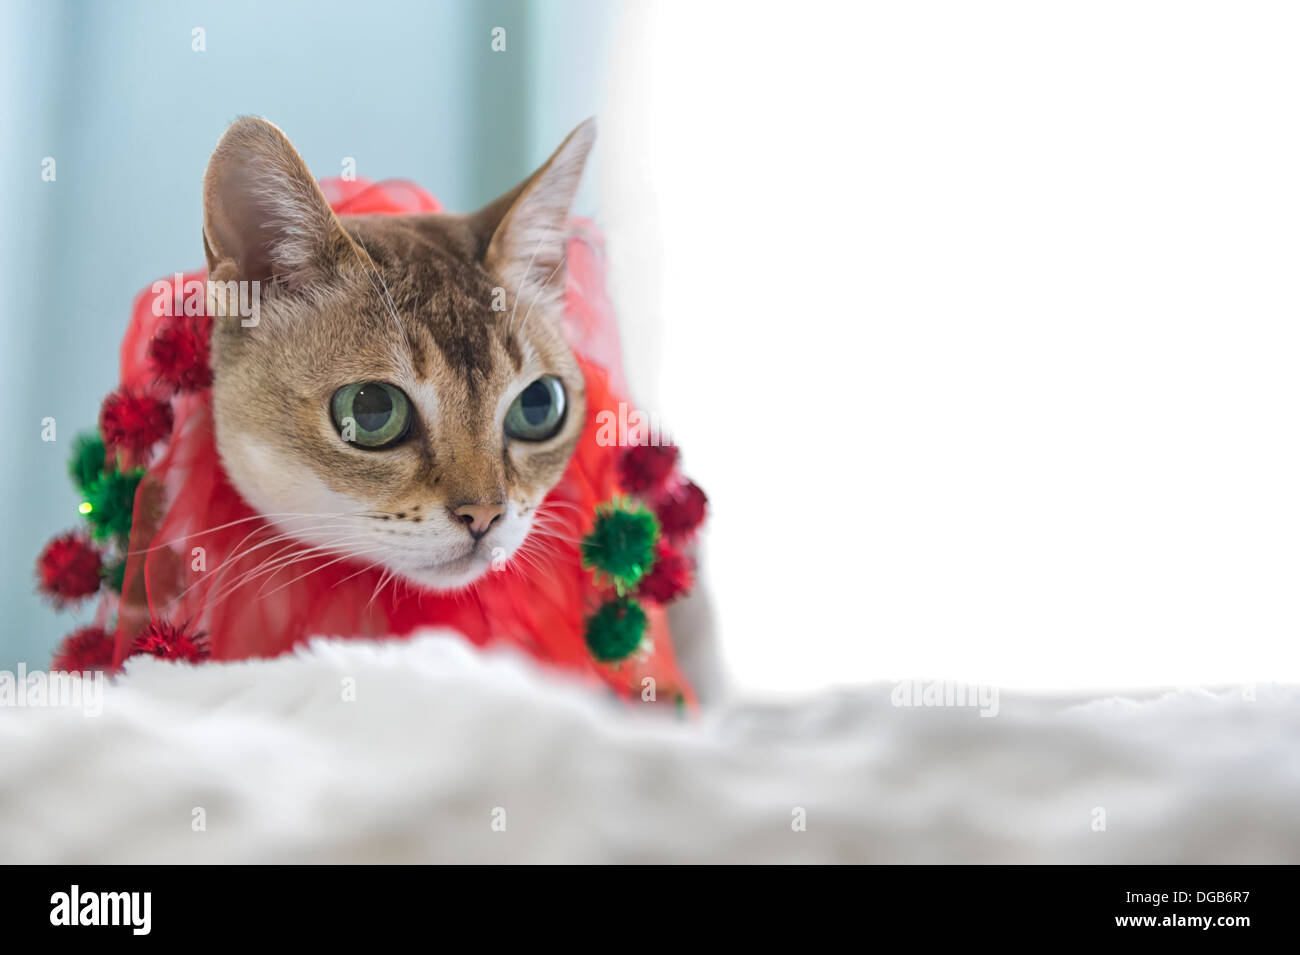 Christmas Cat, a Singapura, on snow white, at side of bright window Stock Photo